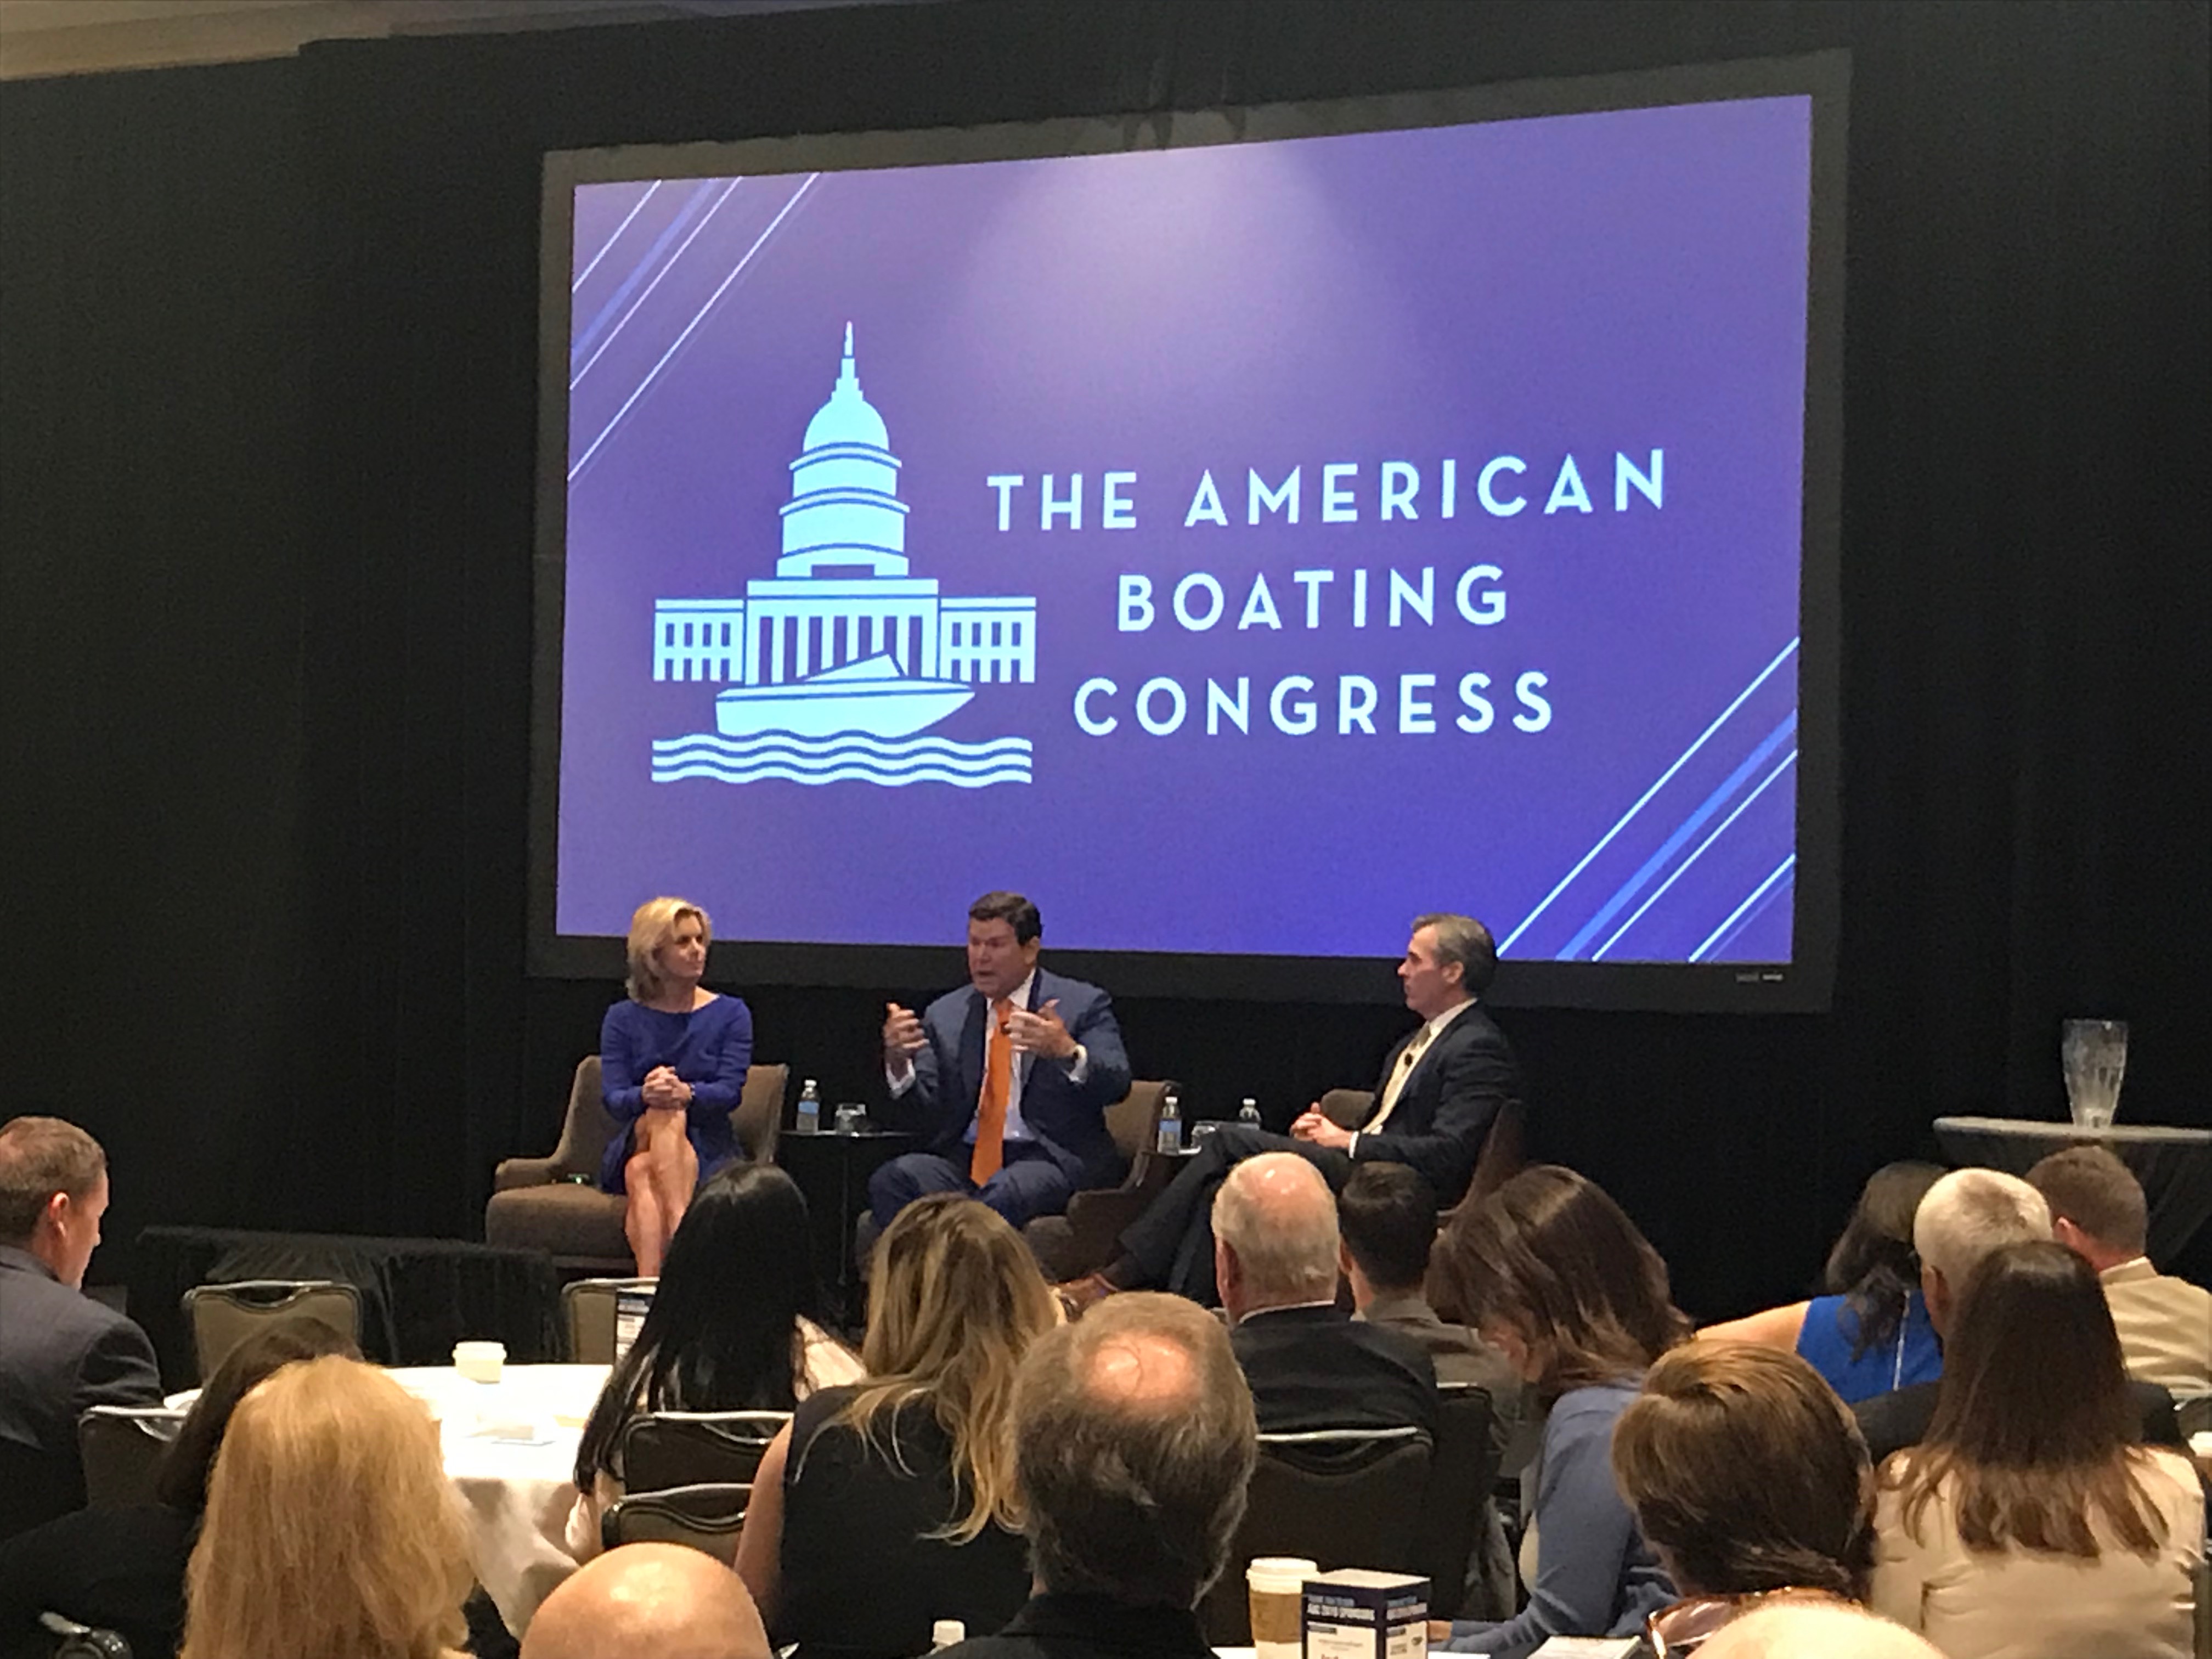 SeaDek American Boating Congress